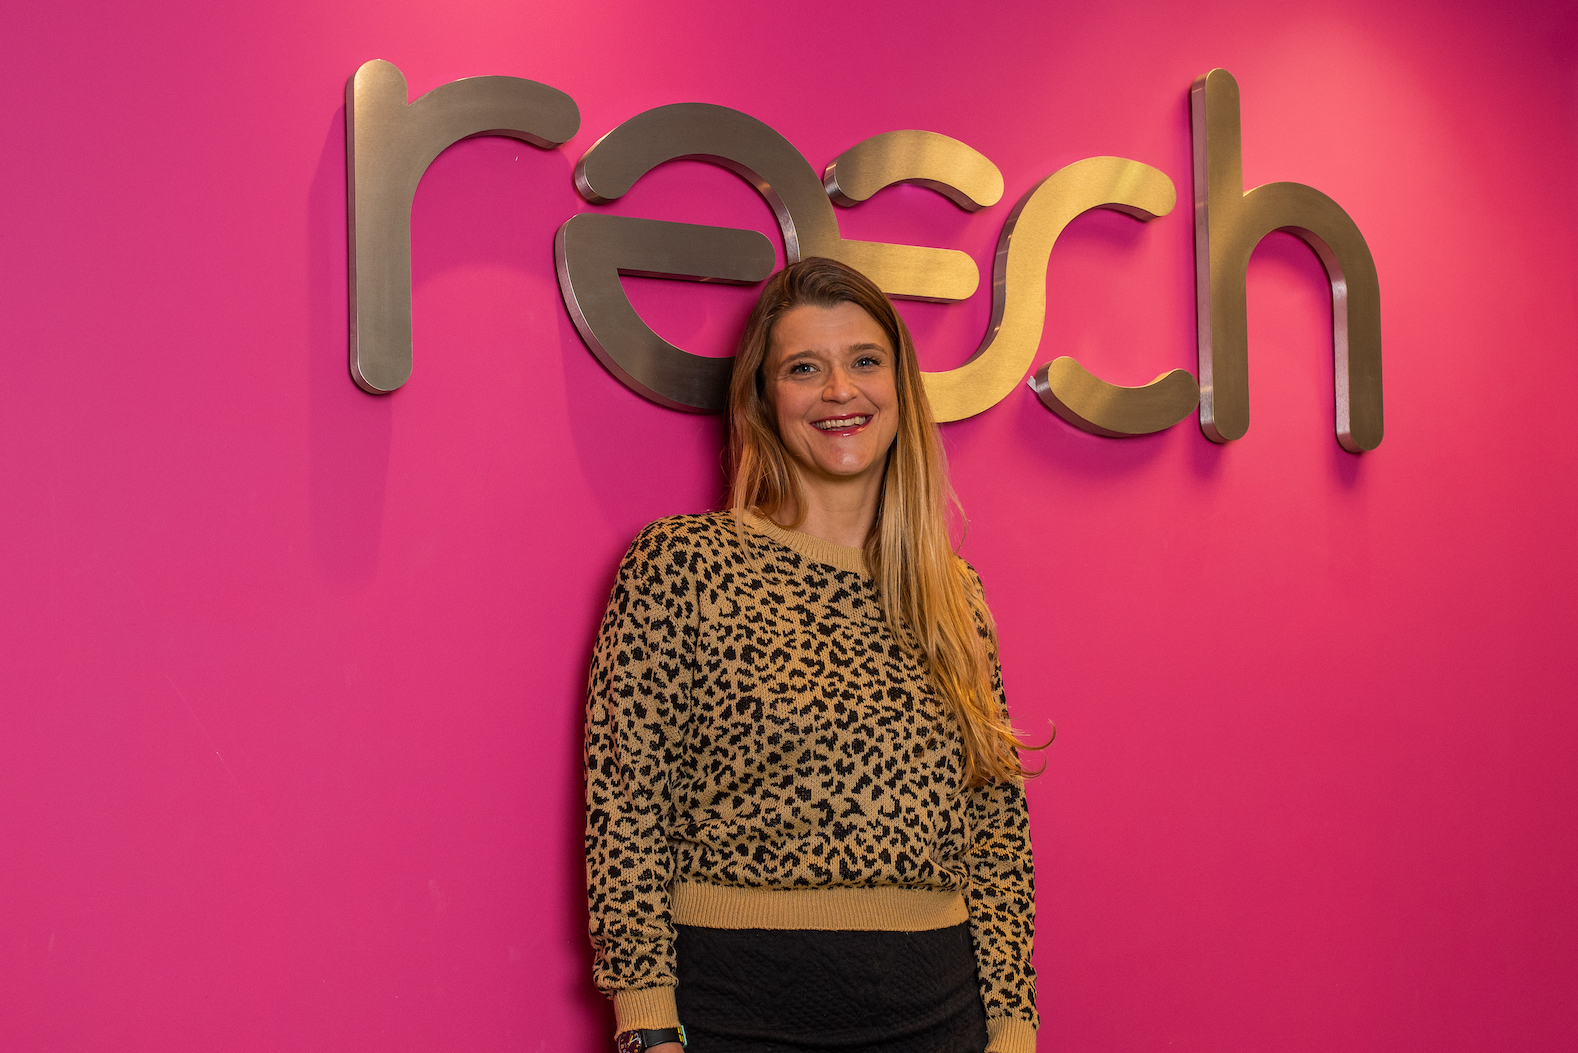 Meet Zoe, the newest Director to join Reech